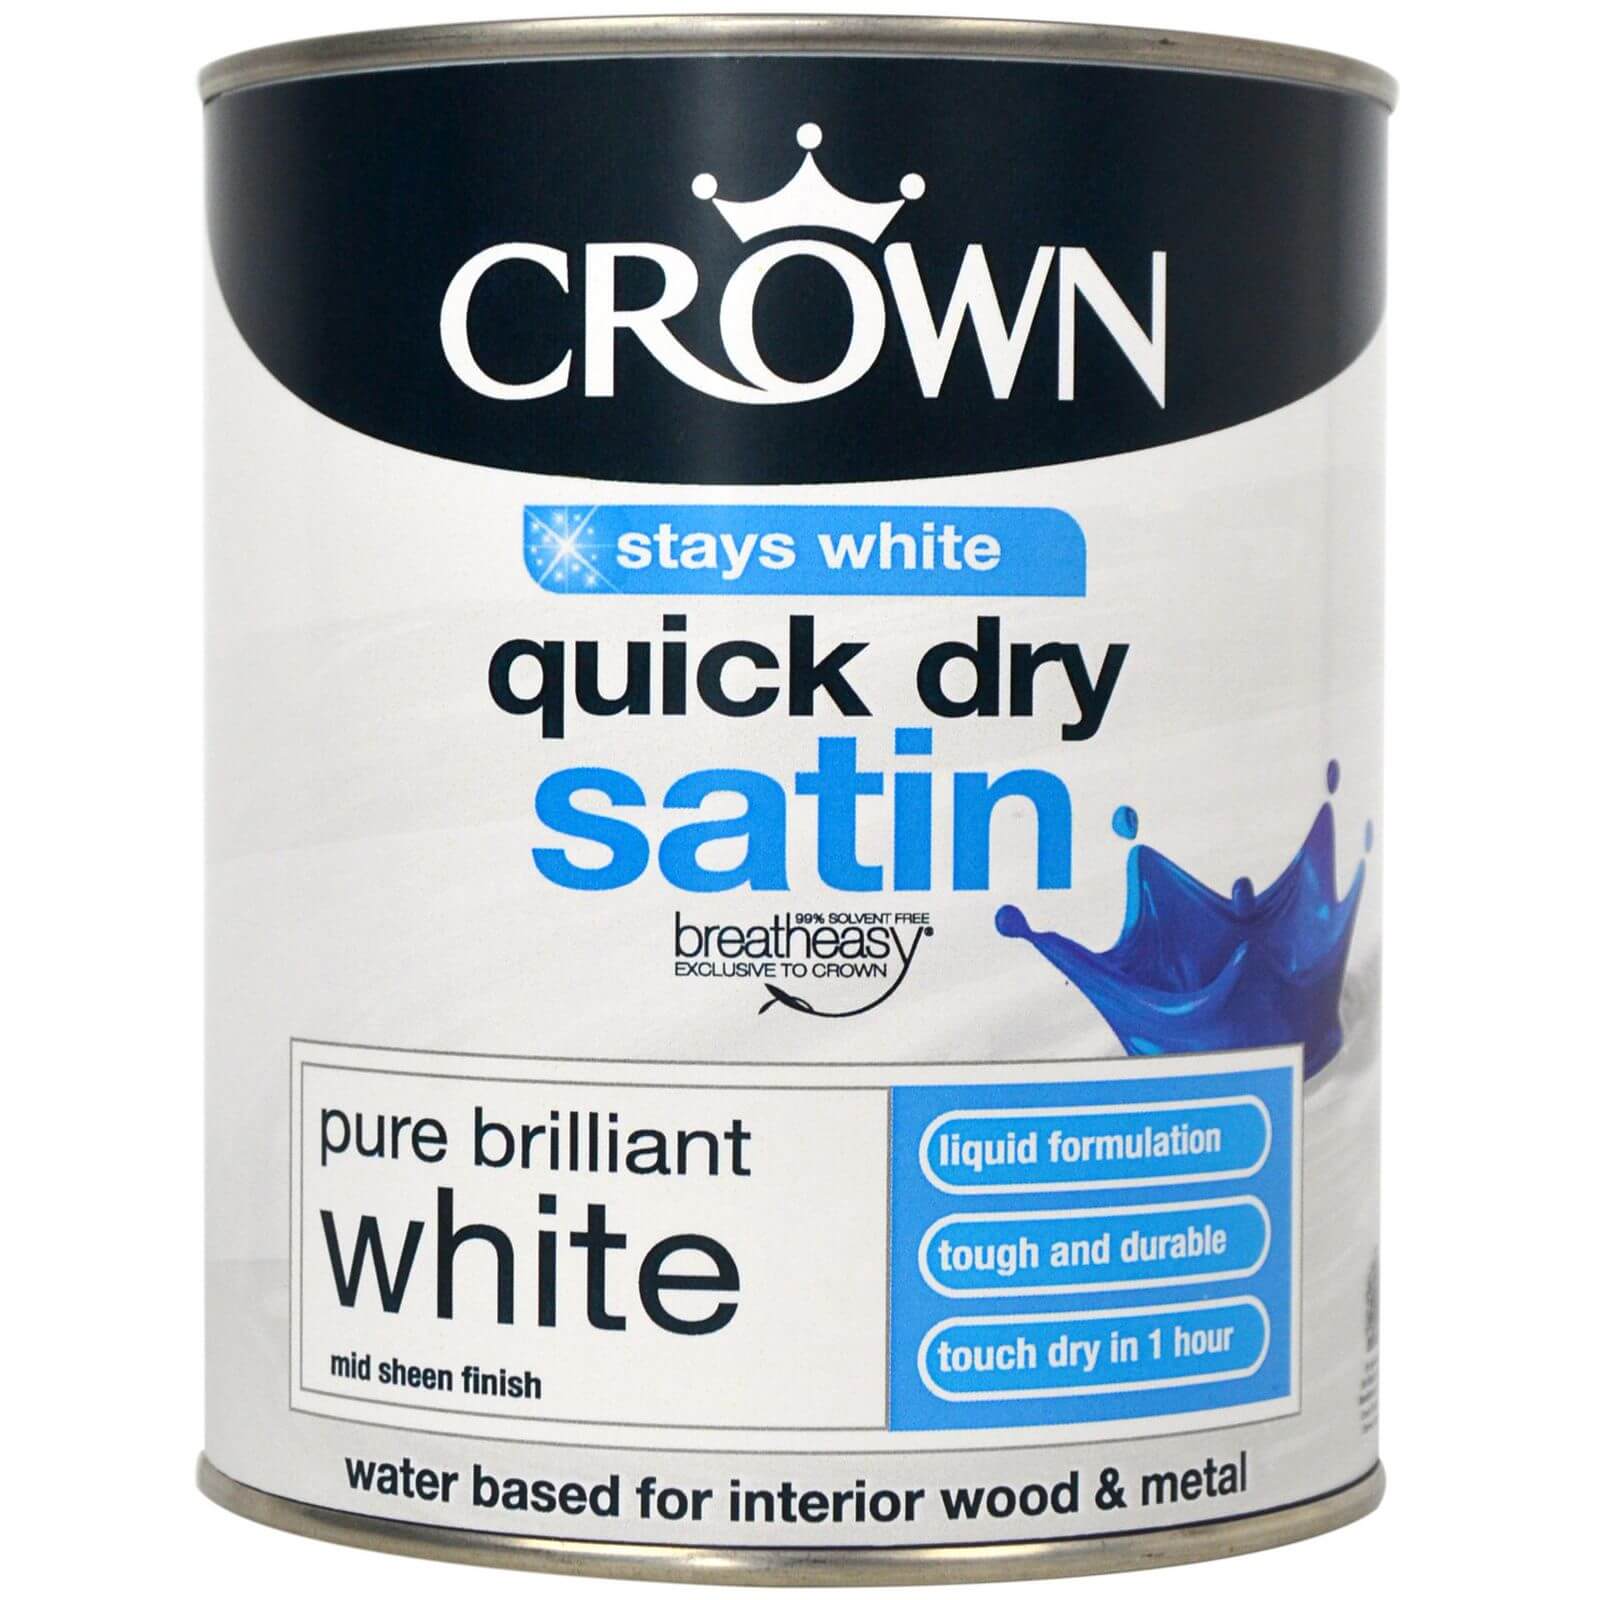 Crown Breatheasy Quick Drying Satin Paint Pure Brilliant White - 750ml